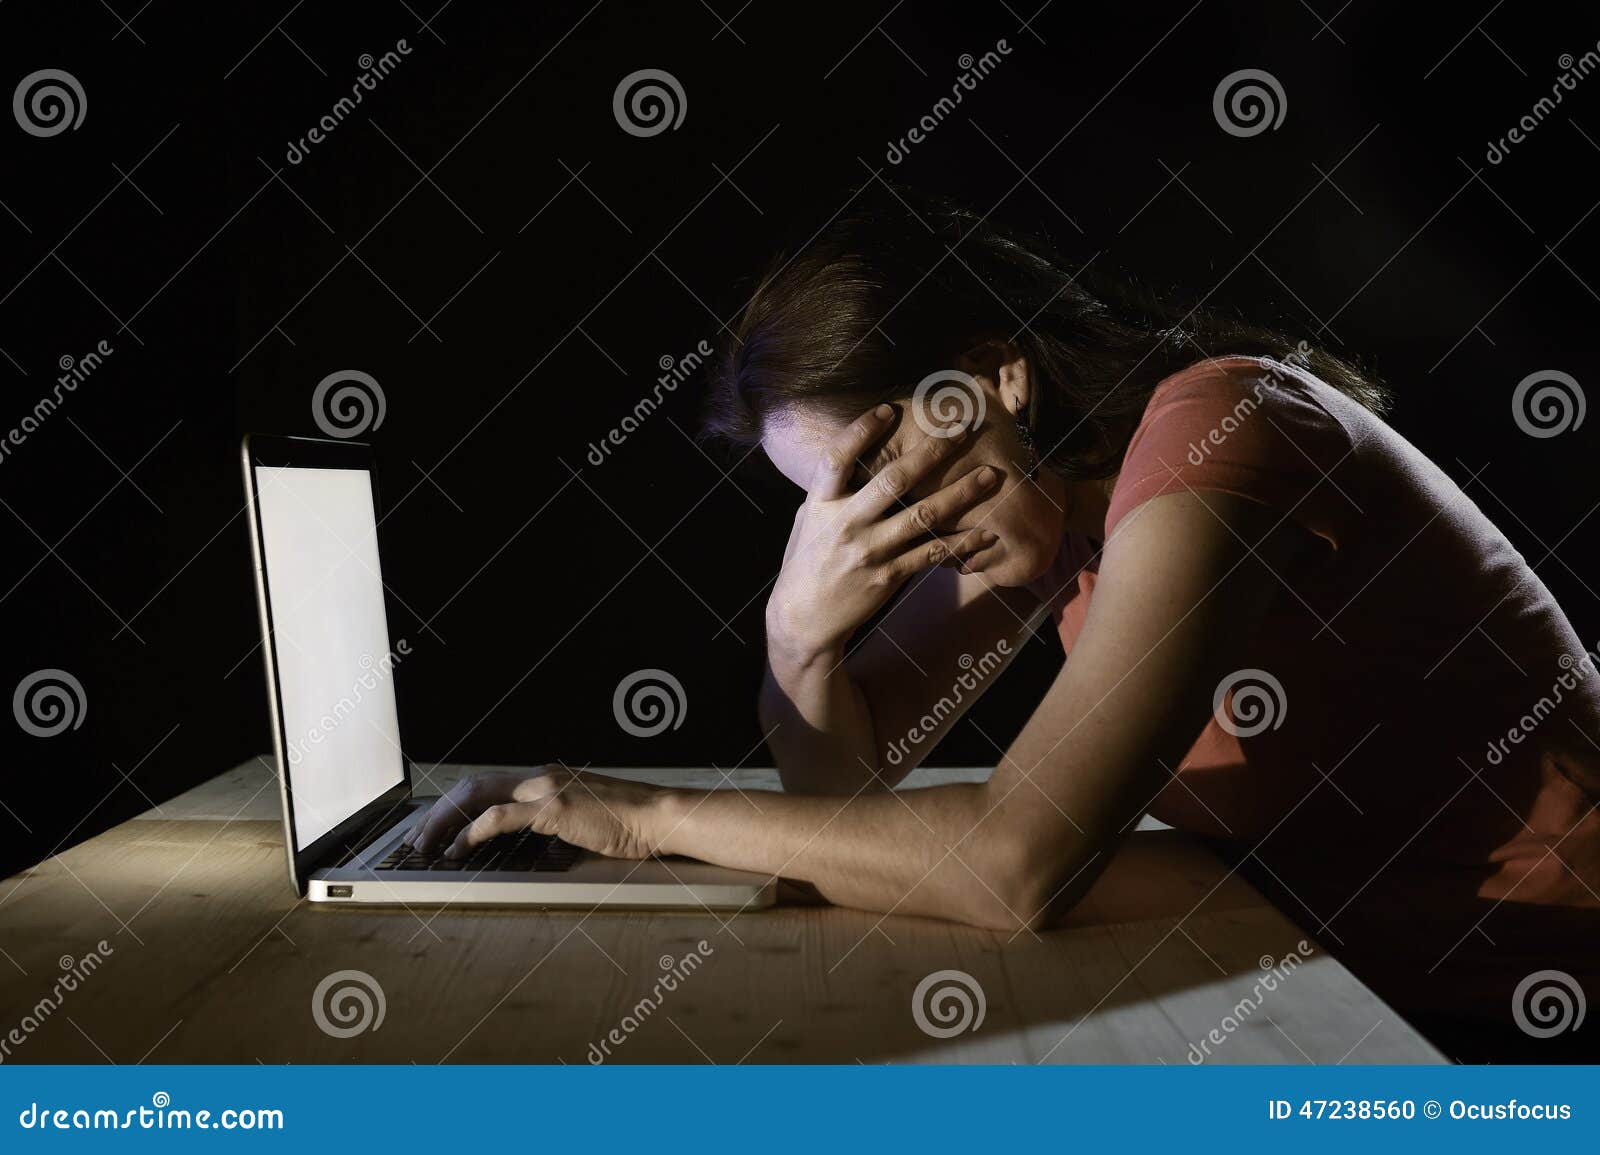 Late Night Homework Woman Falls Asleep At Desk Stock Image